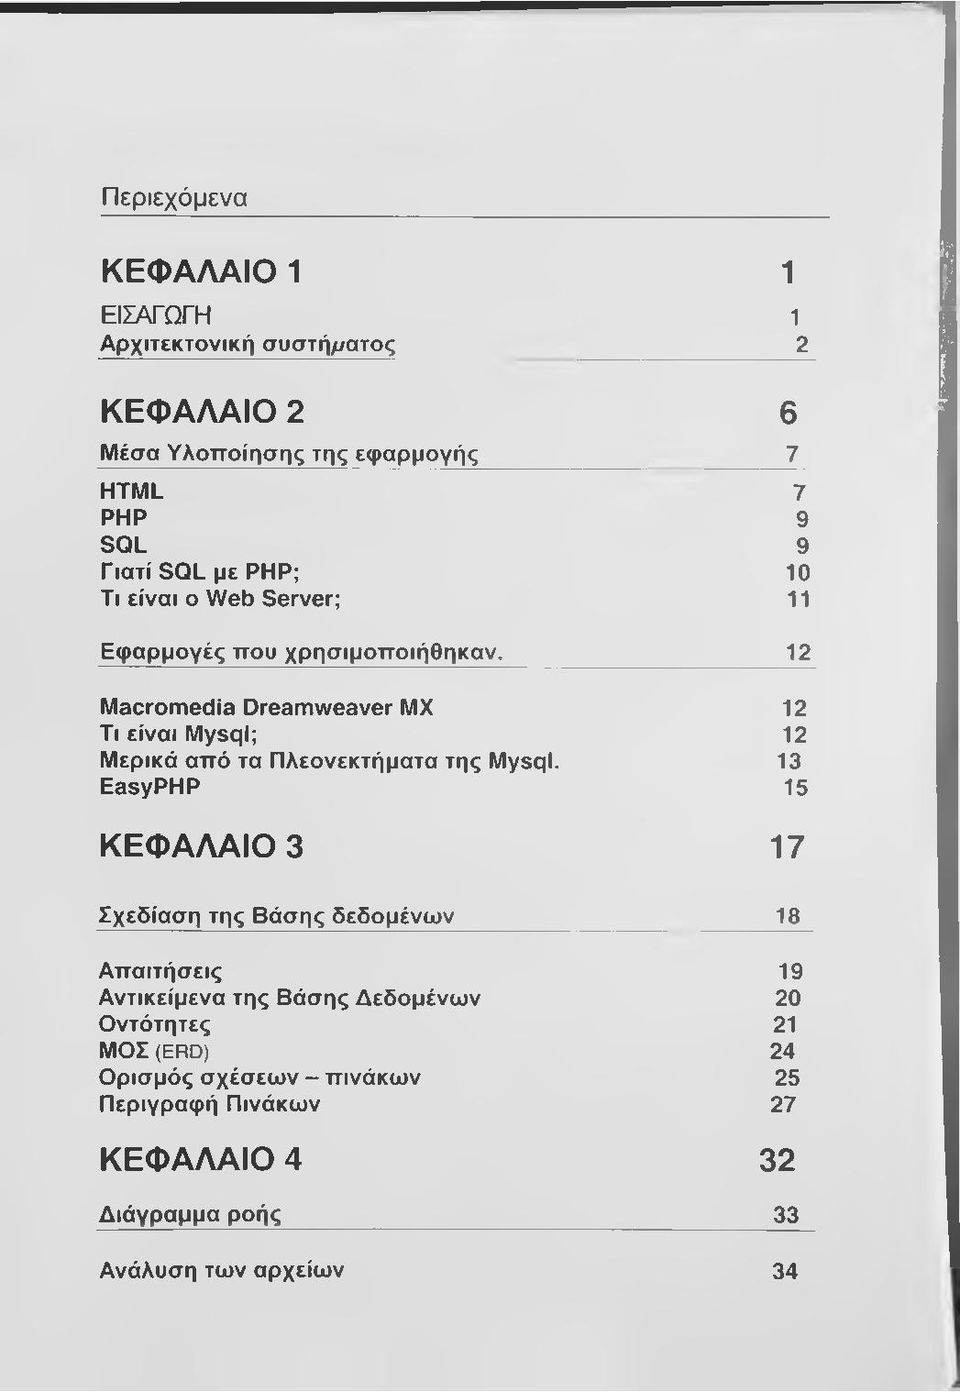 12 Macromedia Dreamweaver MX 12 Τι είναι Mysql; 12 Μερικά από τα Πλεονεκτήματα της Mysql.